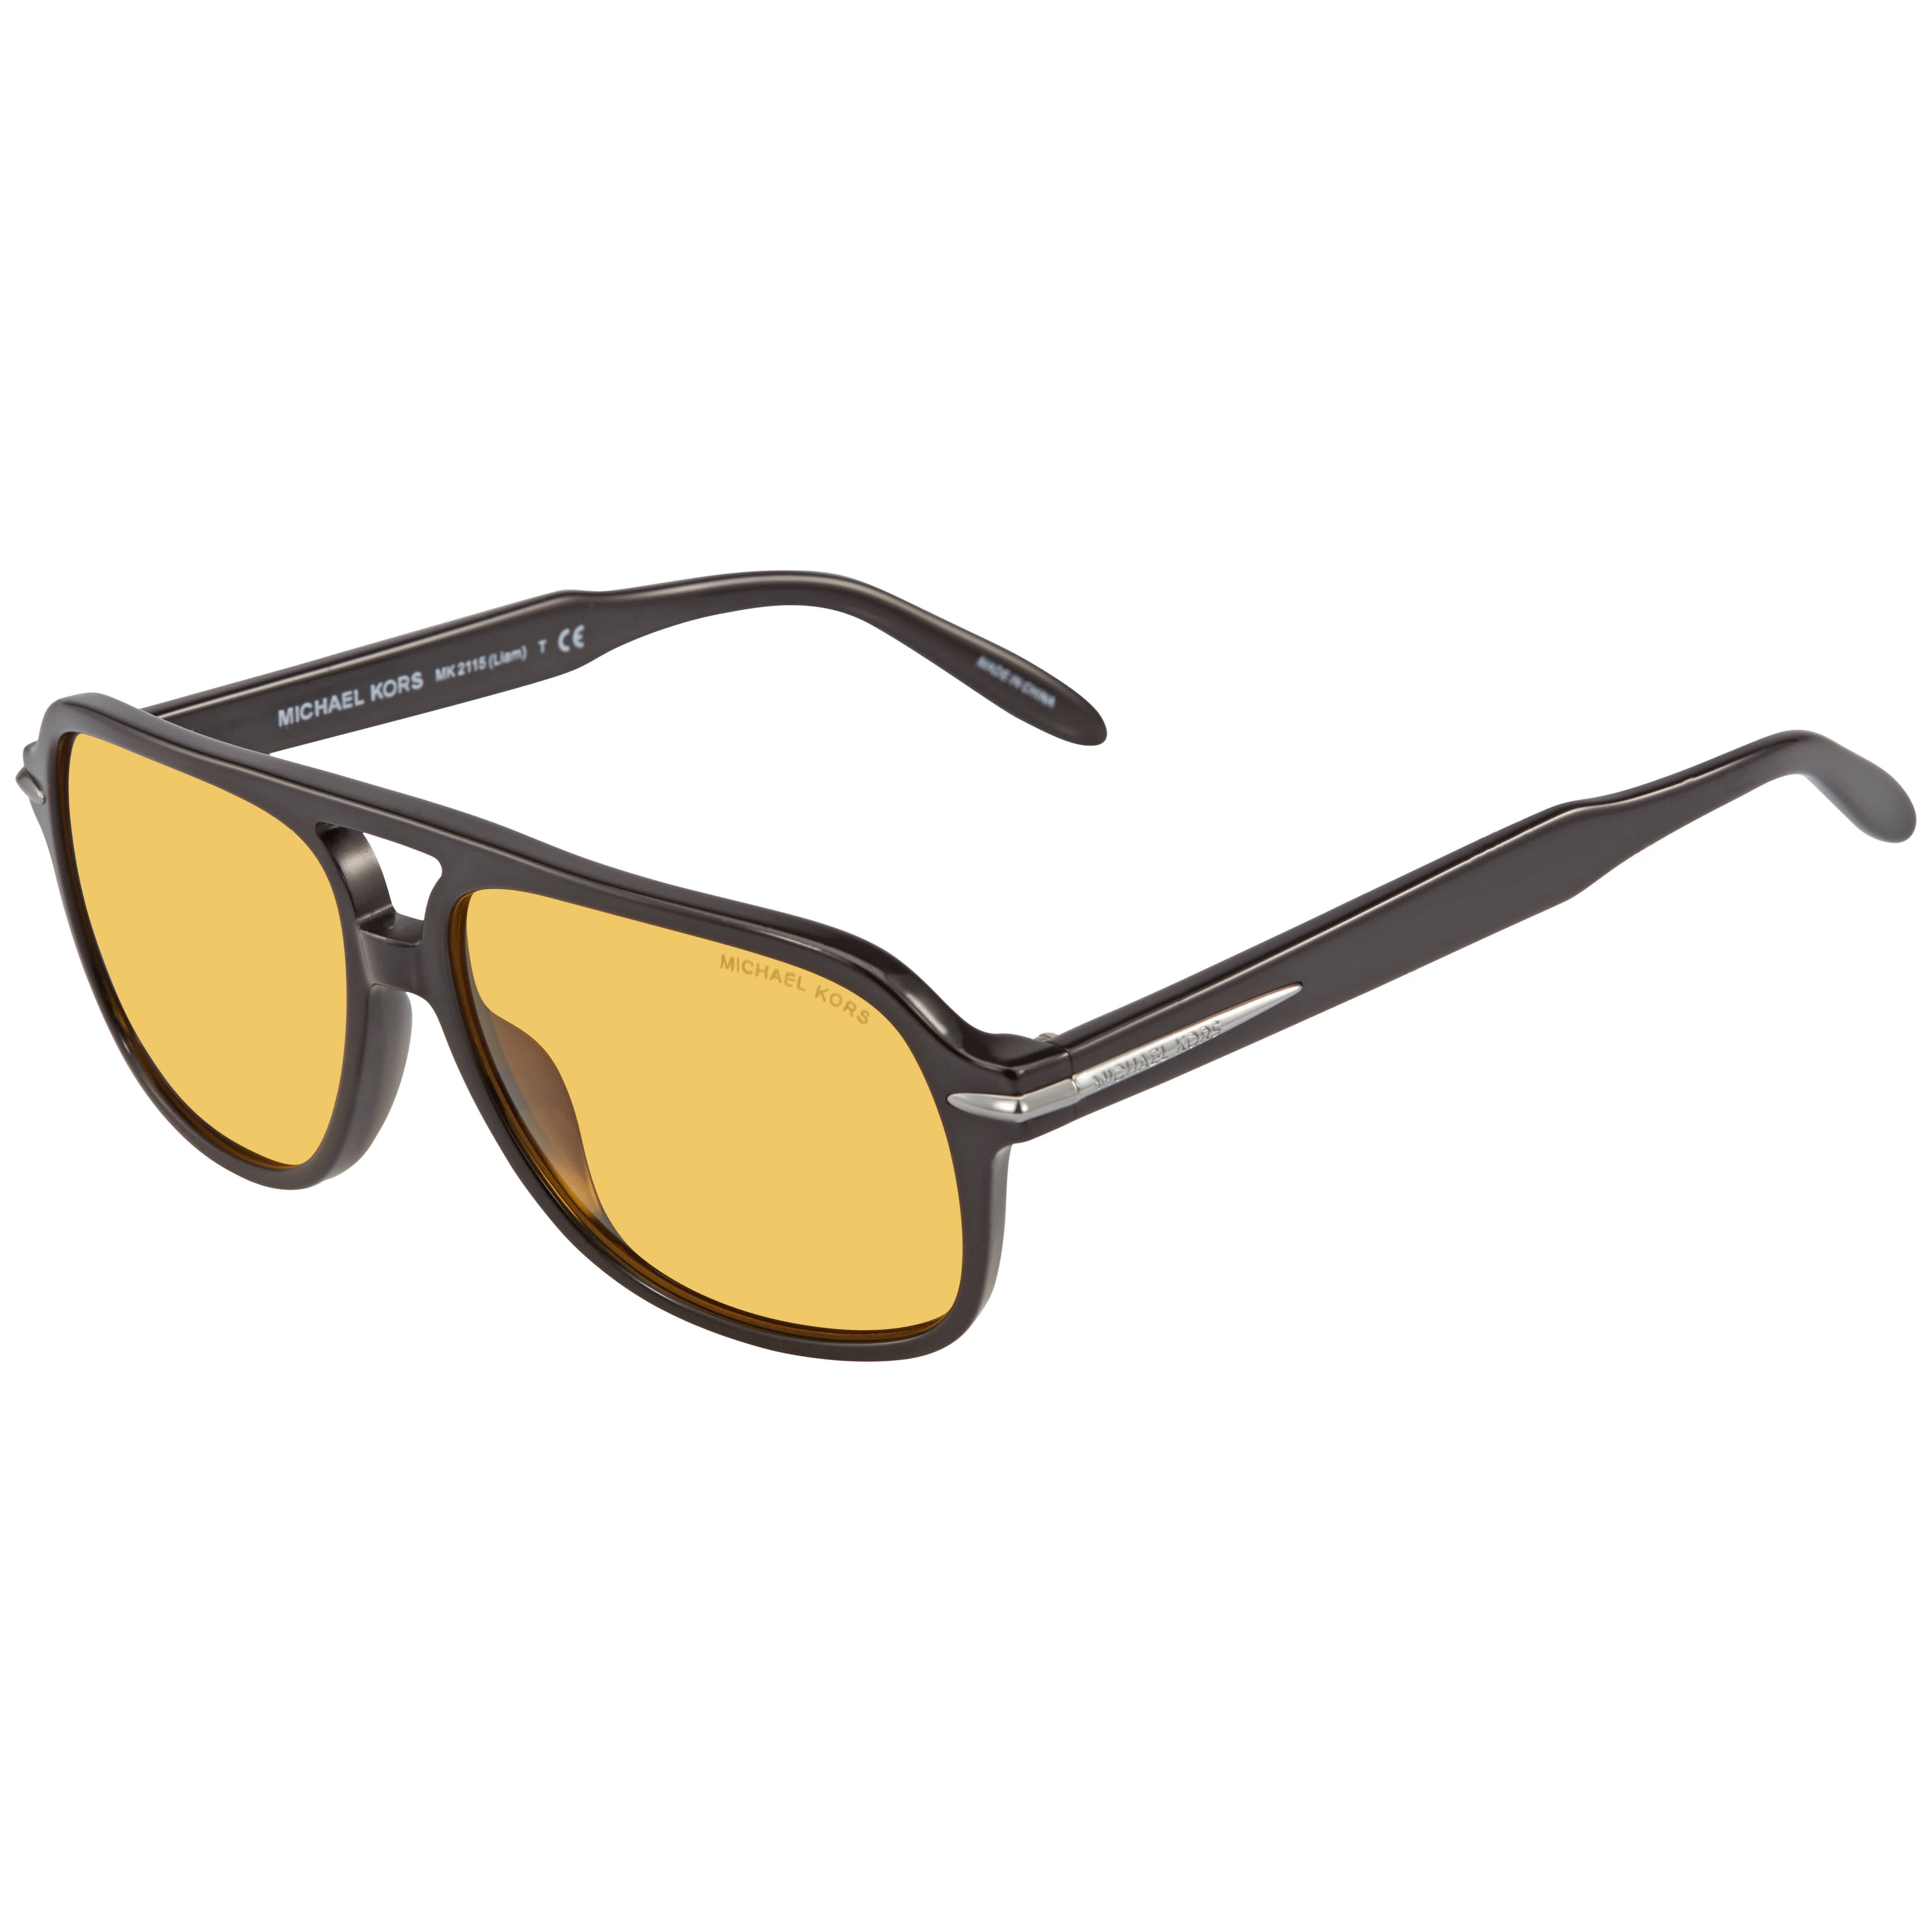 Michael Kors Liam Amber Square Men's Sunglasses MK2115-300585-59 -  